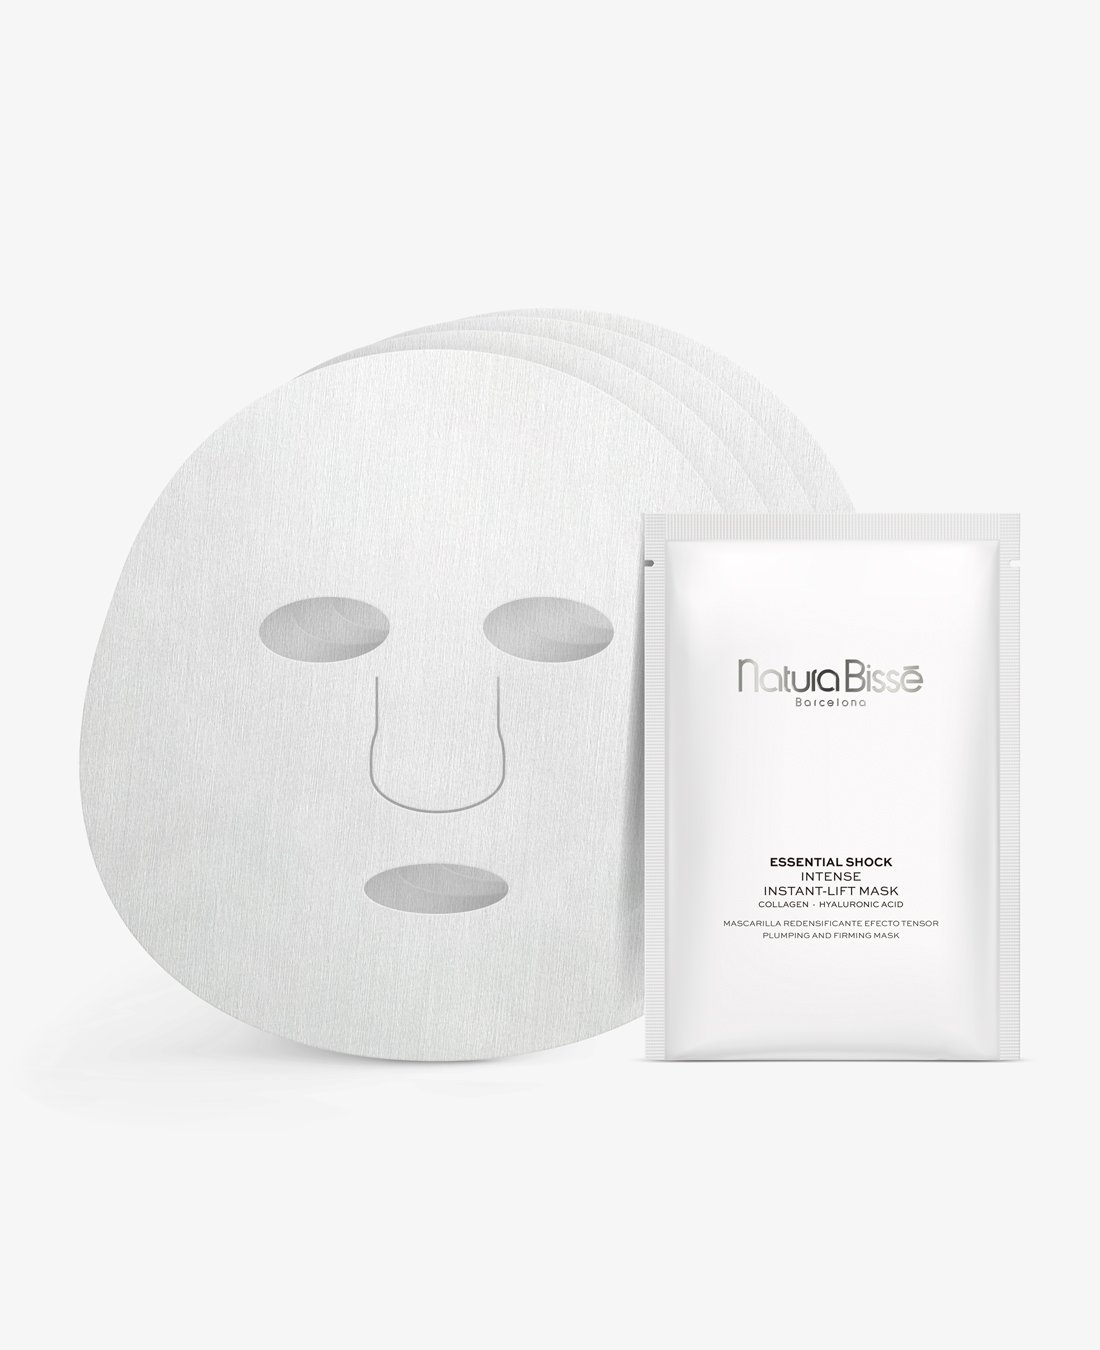 essential shock intense instant-lift mask - Masks - Natura Bissé